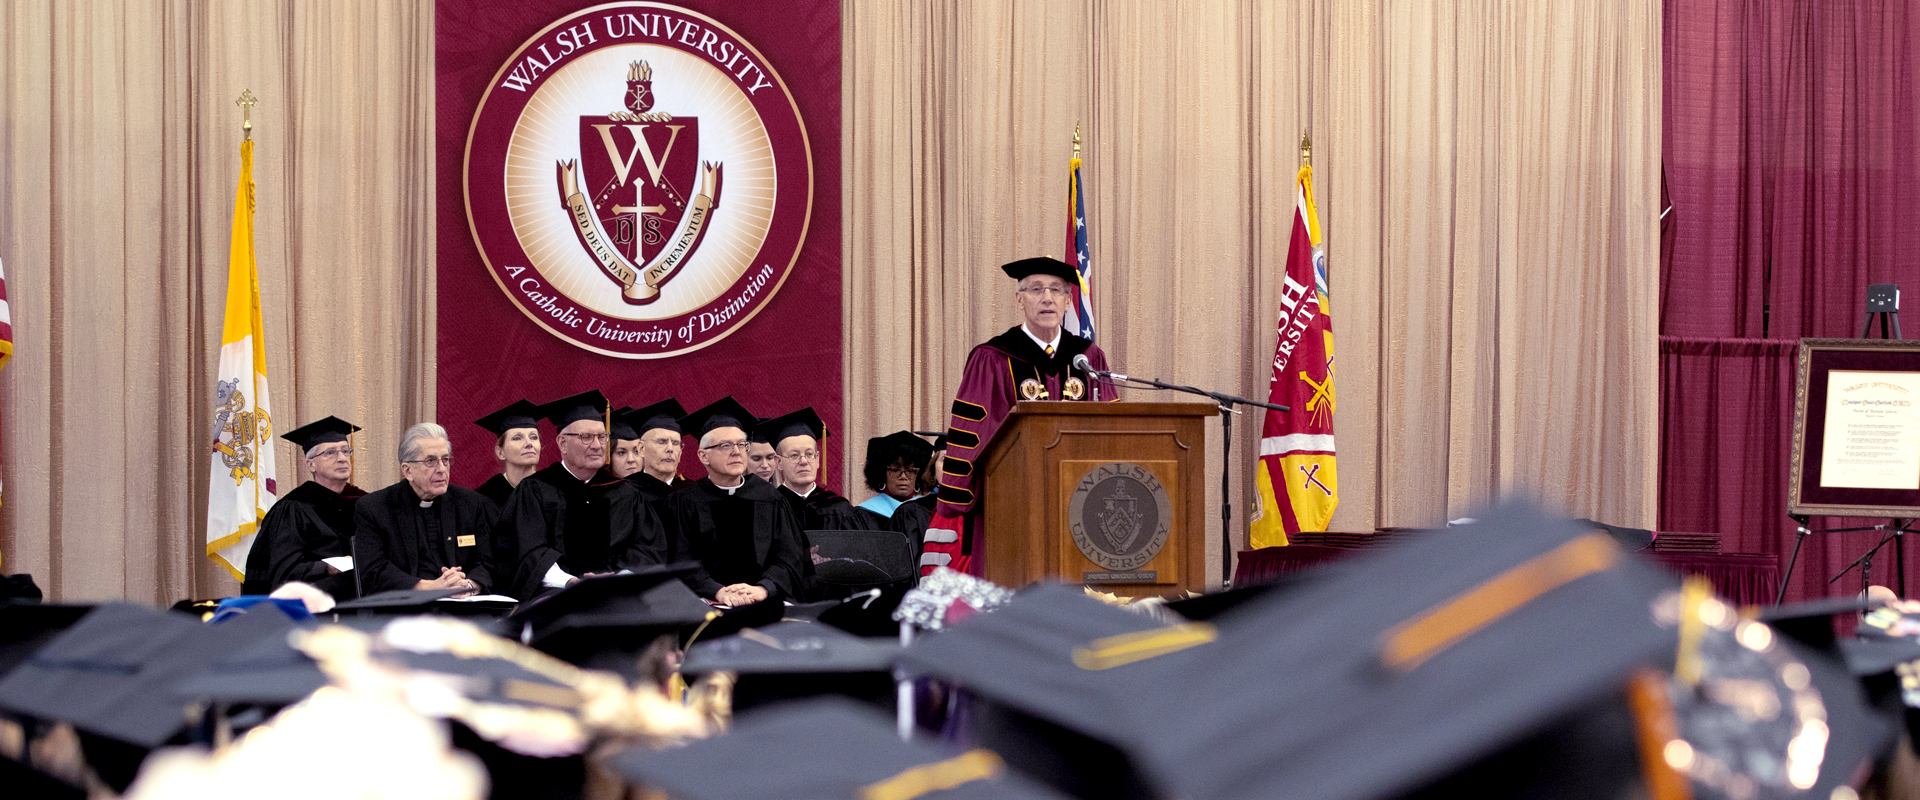 Walsh University Graduates